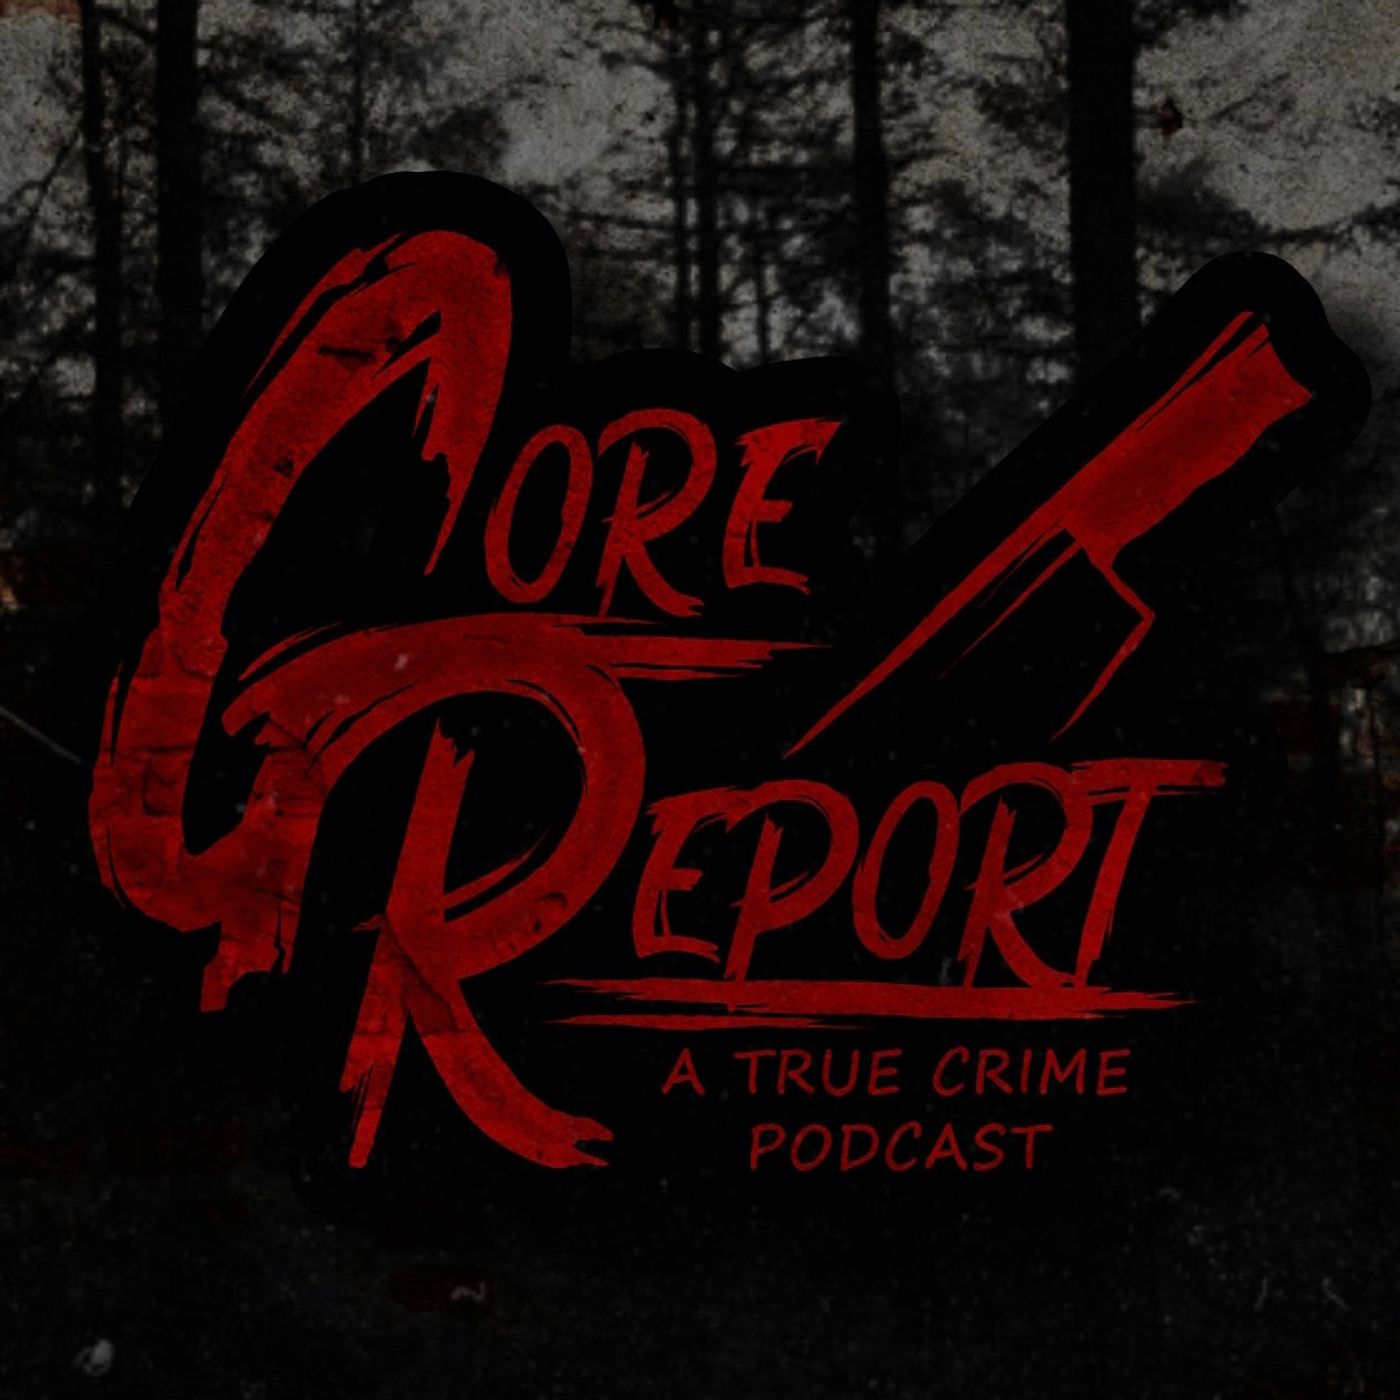 John Wayne Gacy AKA “The Killer Clown” Part 1 by Gore Report